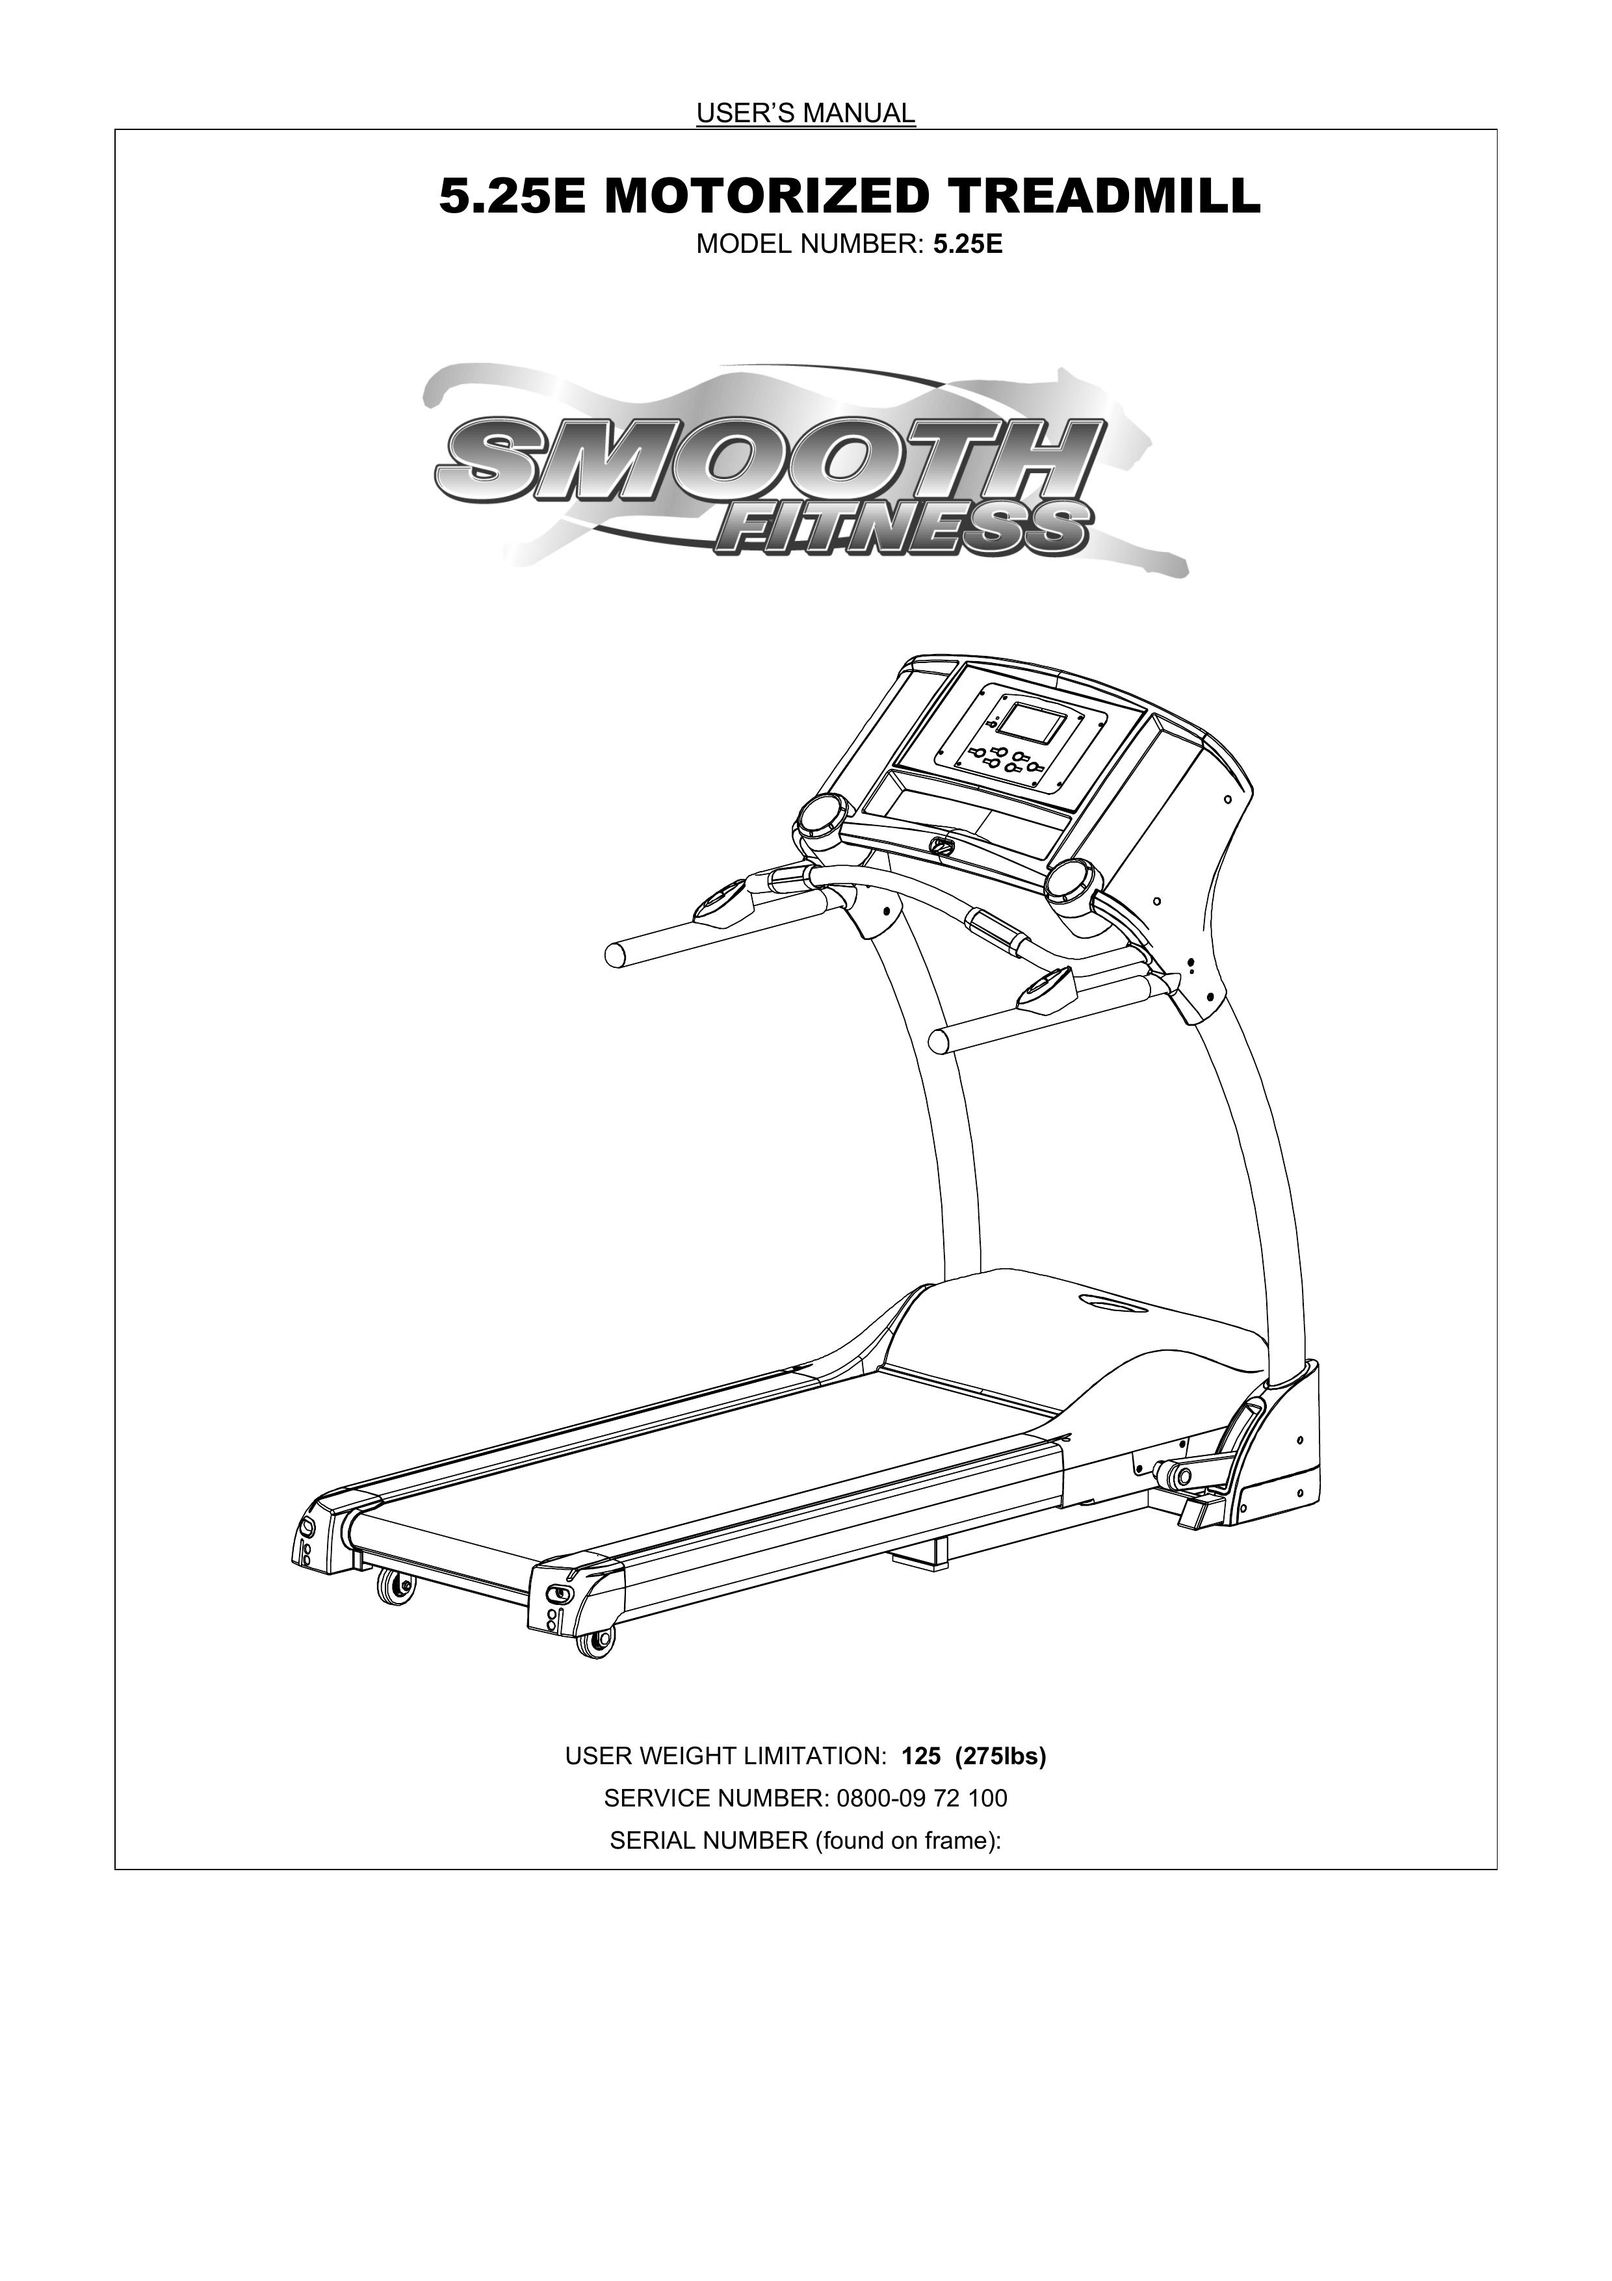 Smooth Fitness 5.25E Treadmill User Manual